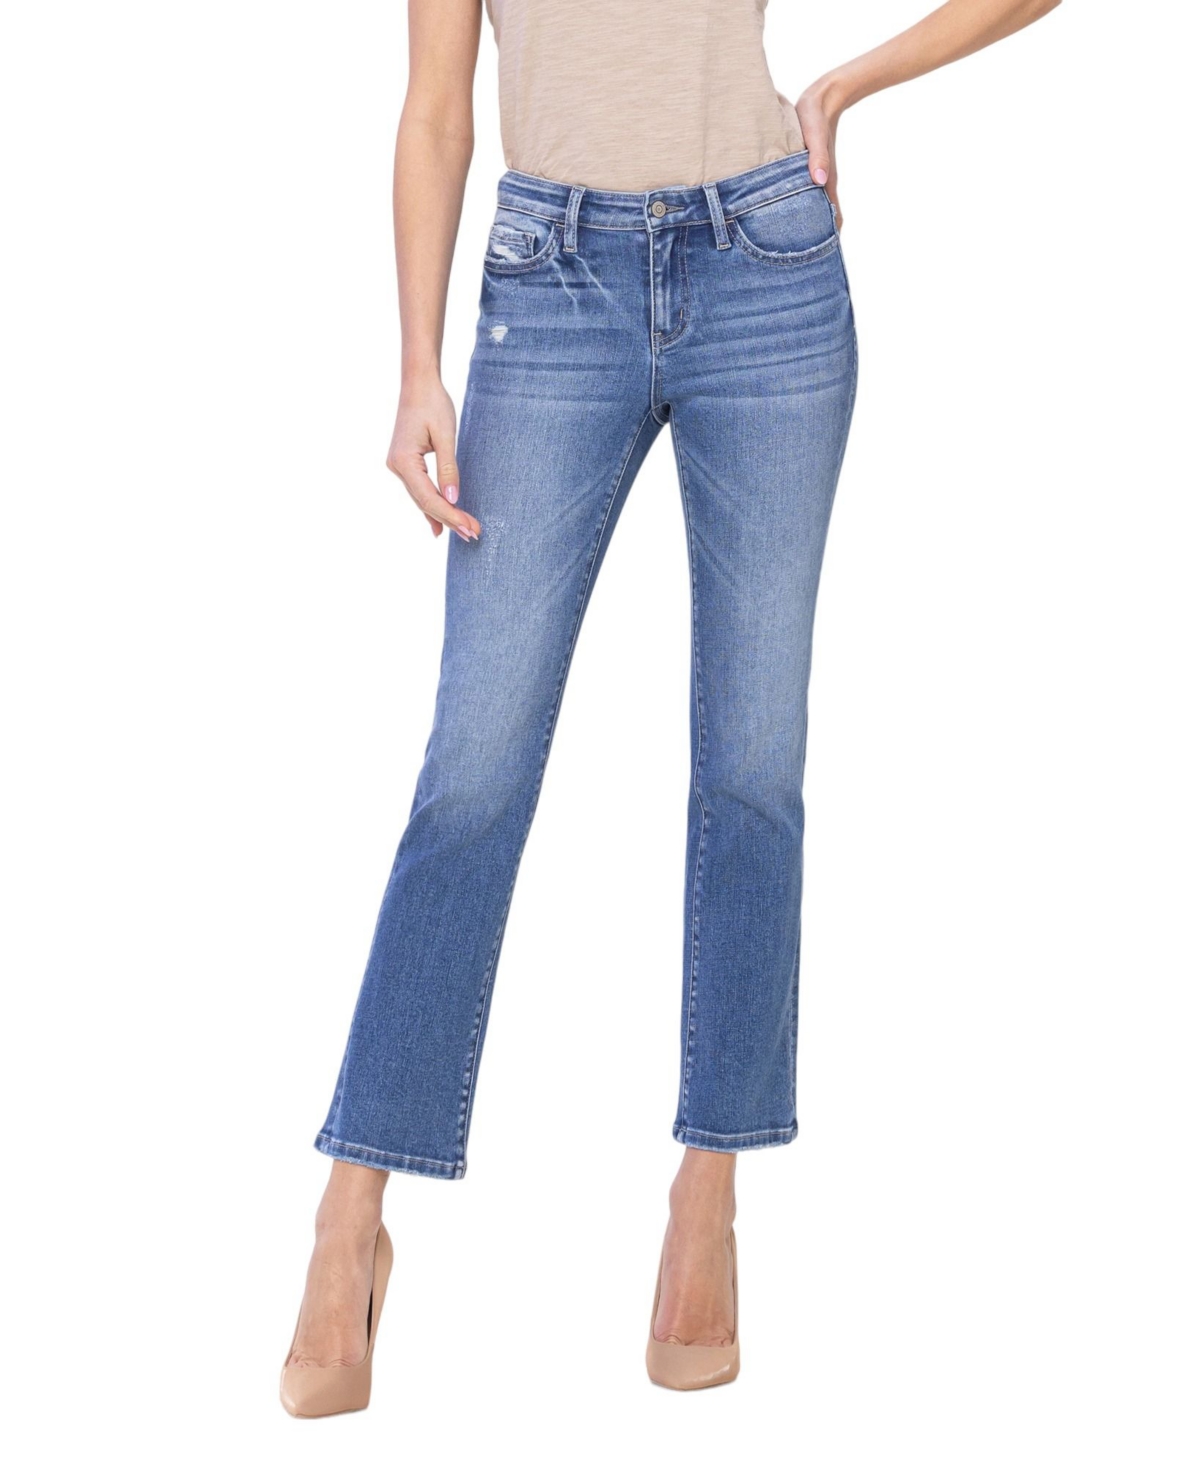 Women's Low Rise Slim Bootcut Jeans - Clean blue